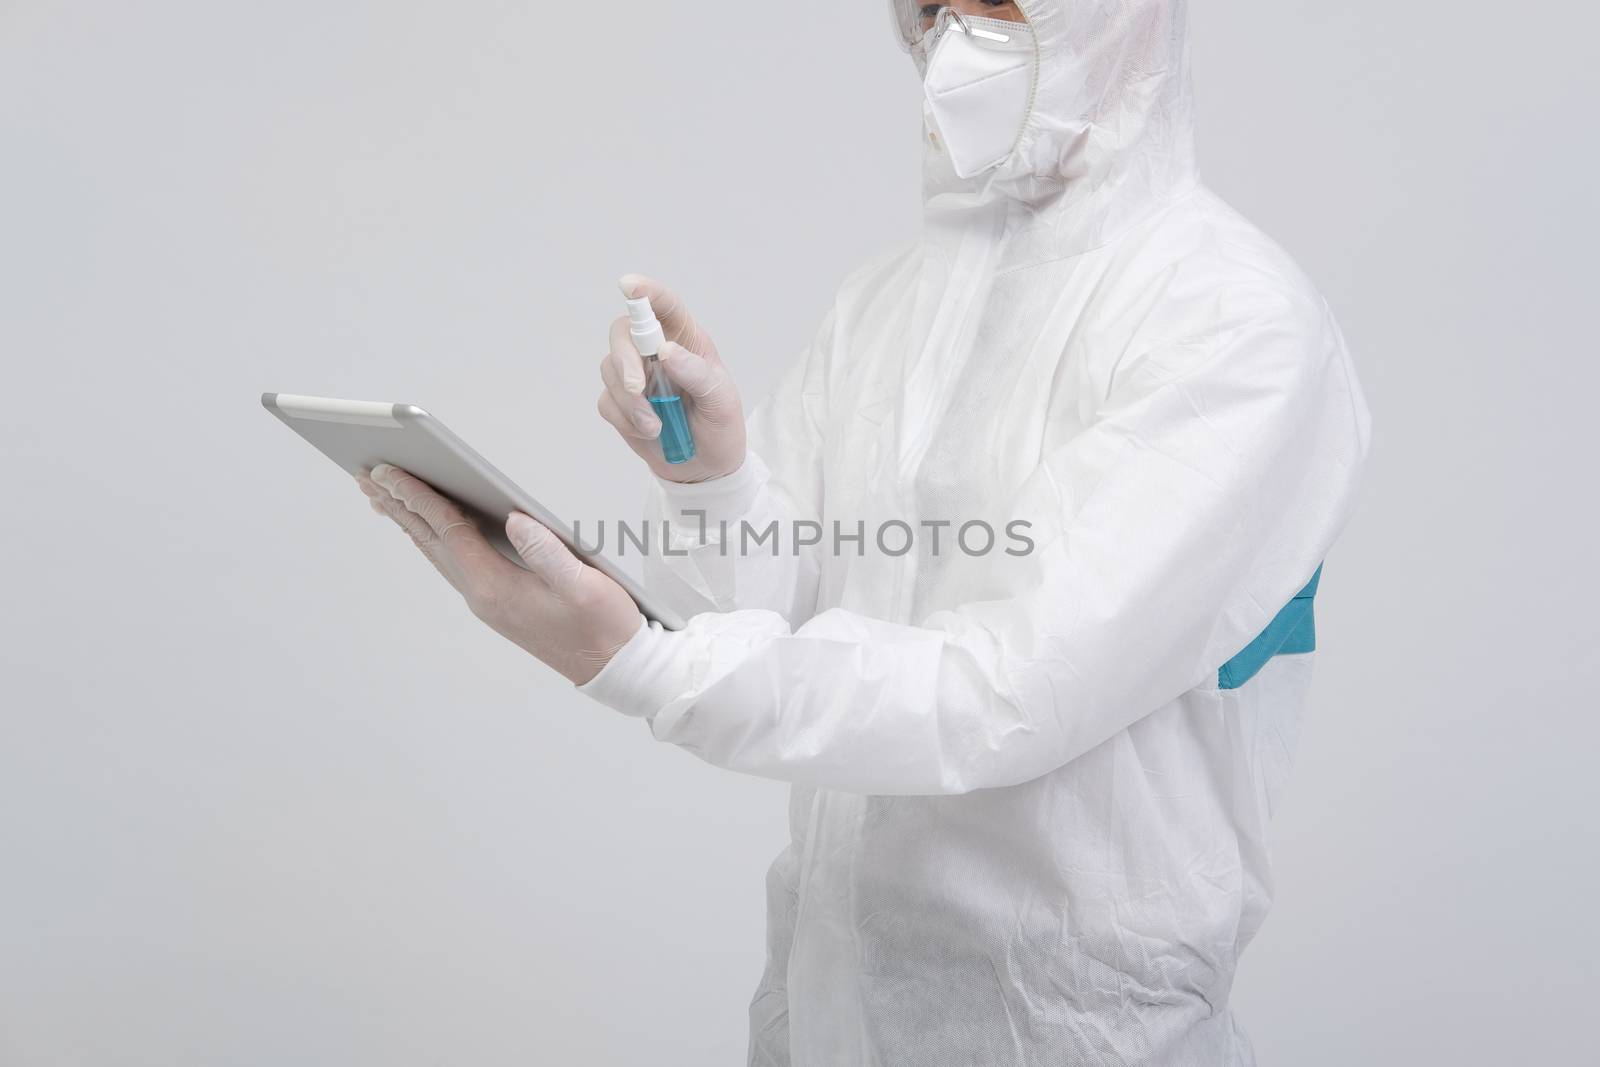 man scientist wearing biological protective uniform suit clothing, mask, gloves spraying sanitizer on tablet for sanitizing virus bacteria